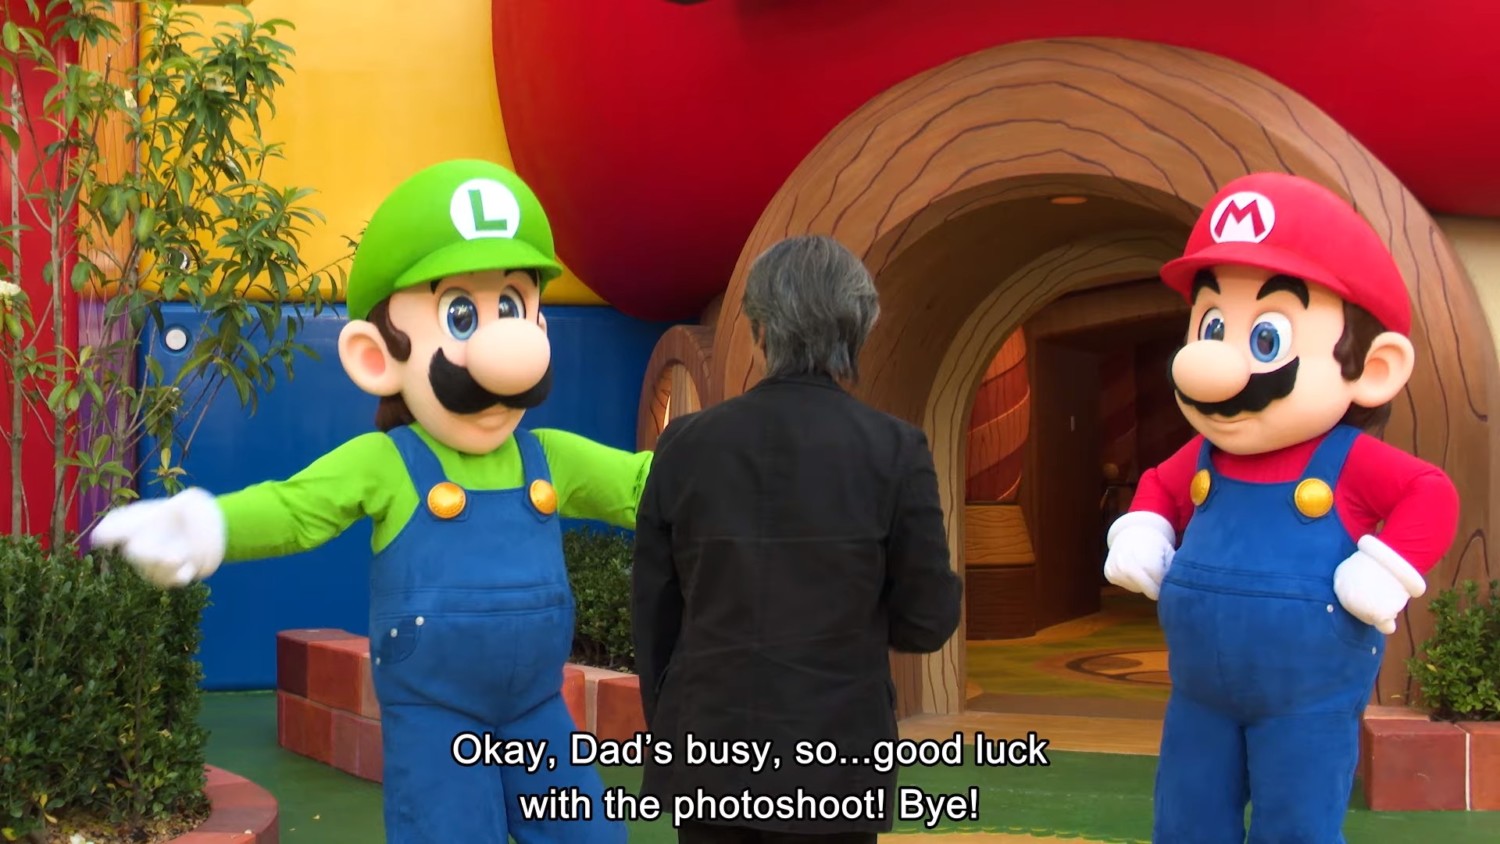 A chat with Shigeru Miyamoto on the eve of Super Mario Run